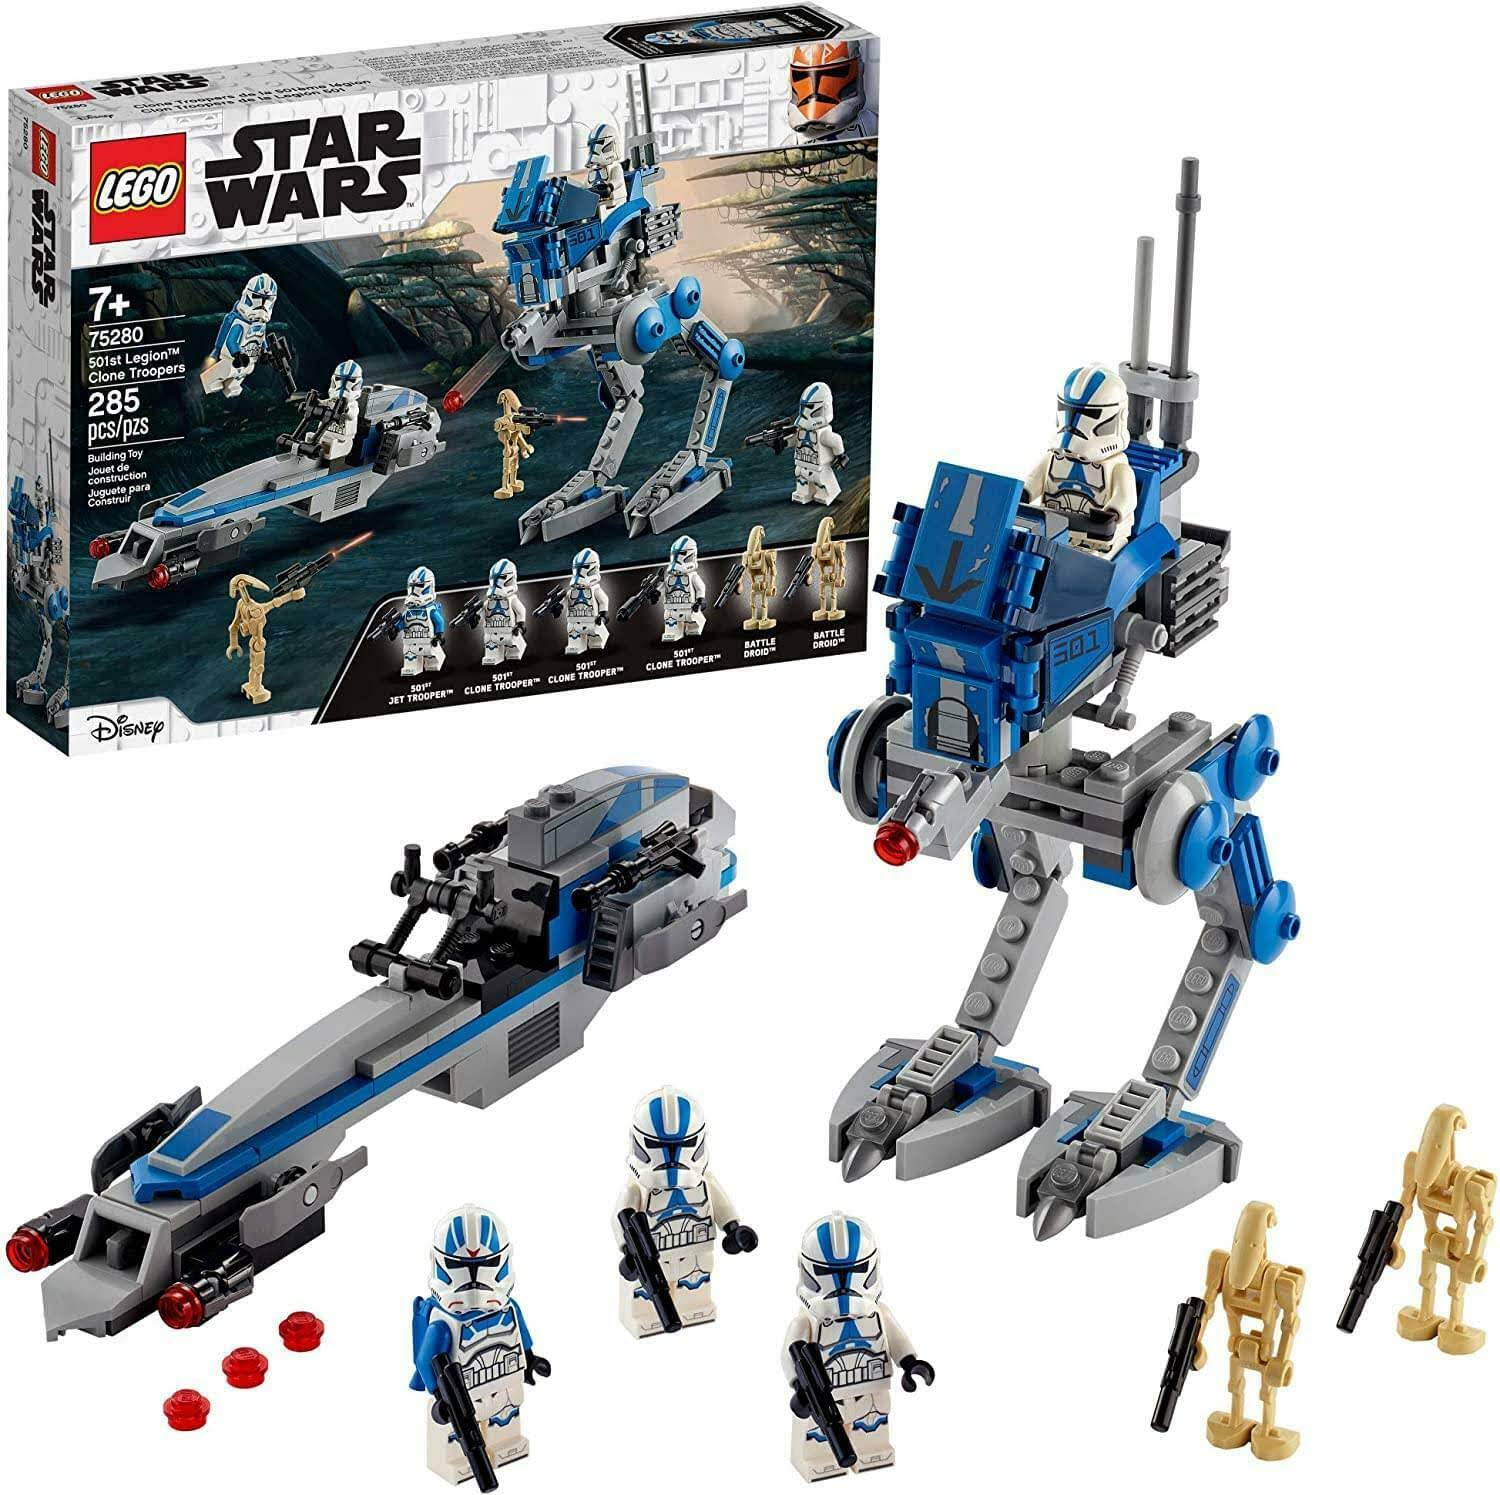 LEGO Star Wars 75280 - 501st Legion Clone Troopers (285 Pieces)